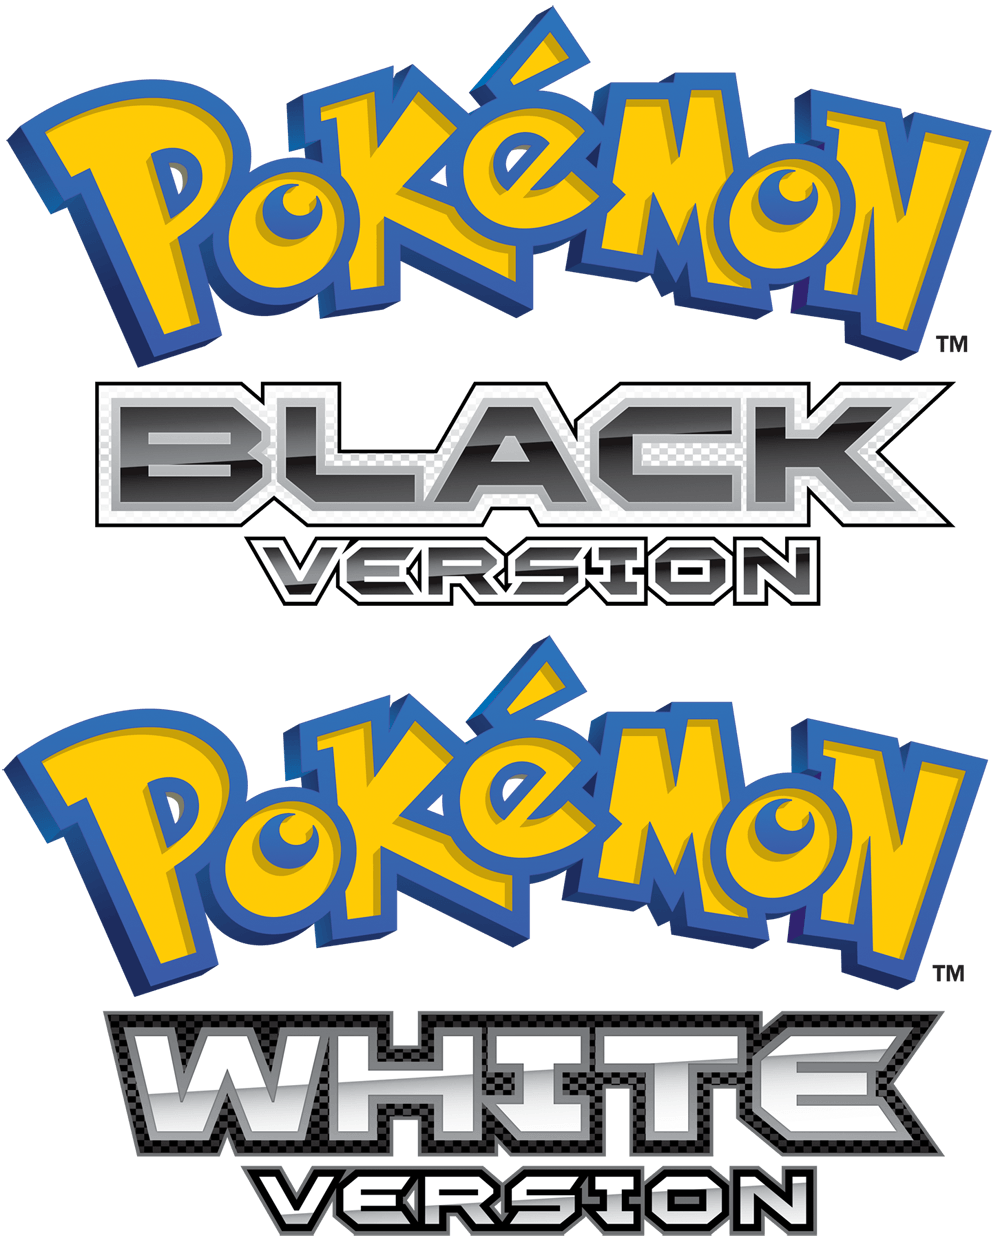 Pokemon Black and White Logo - 5th Gen Logos A No-Go? - The PokéCommunity Forums